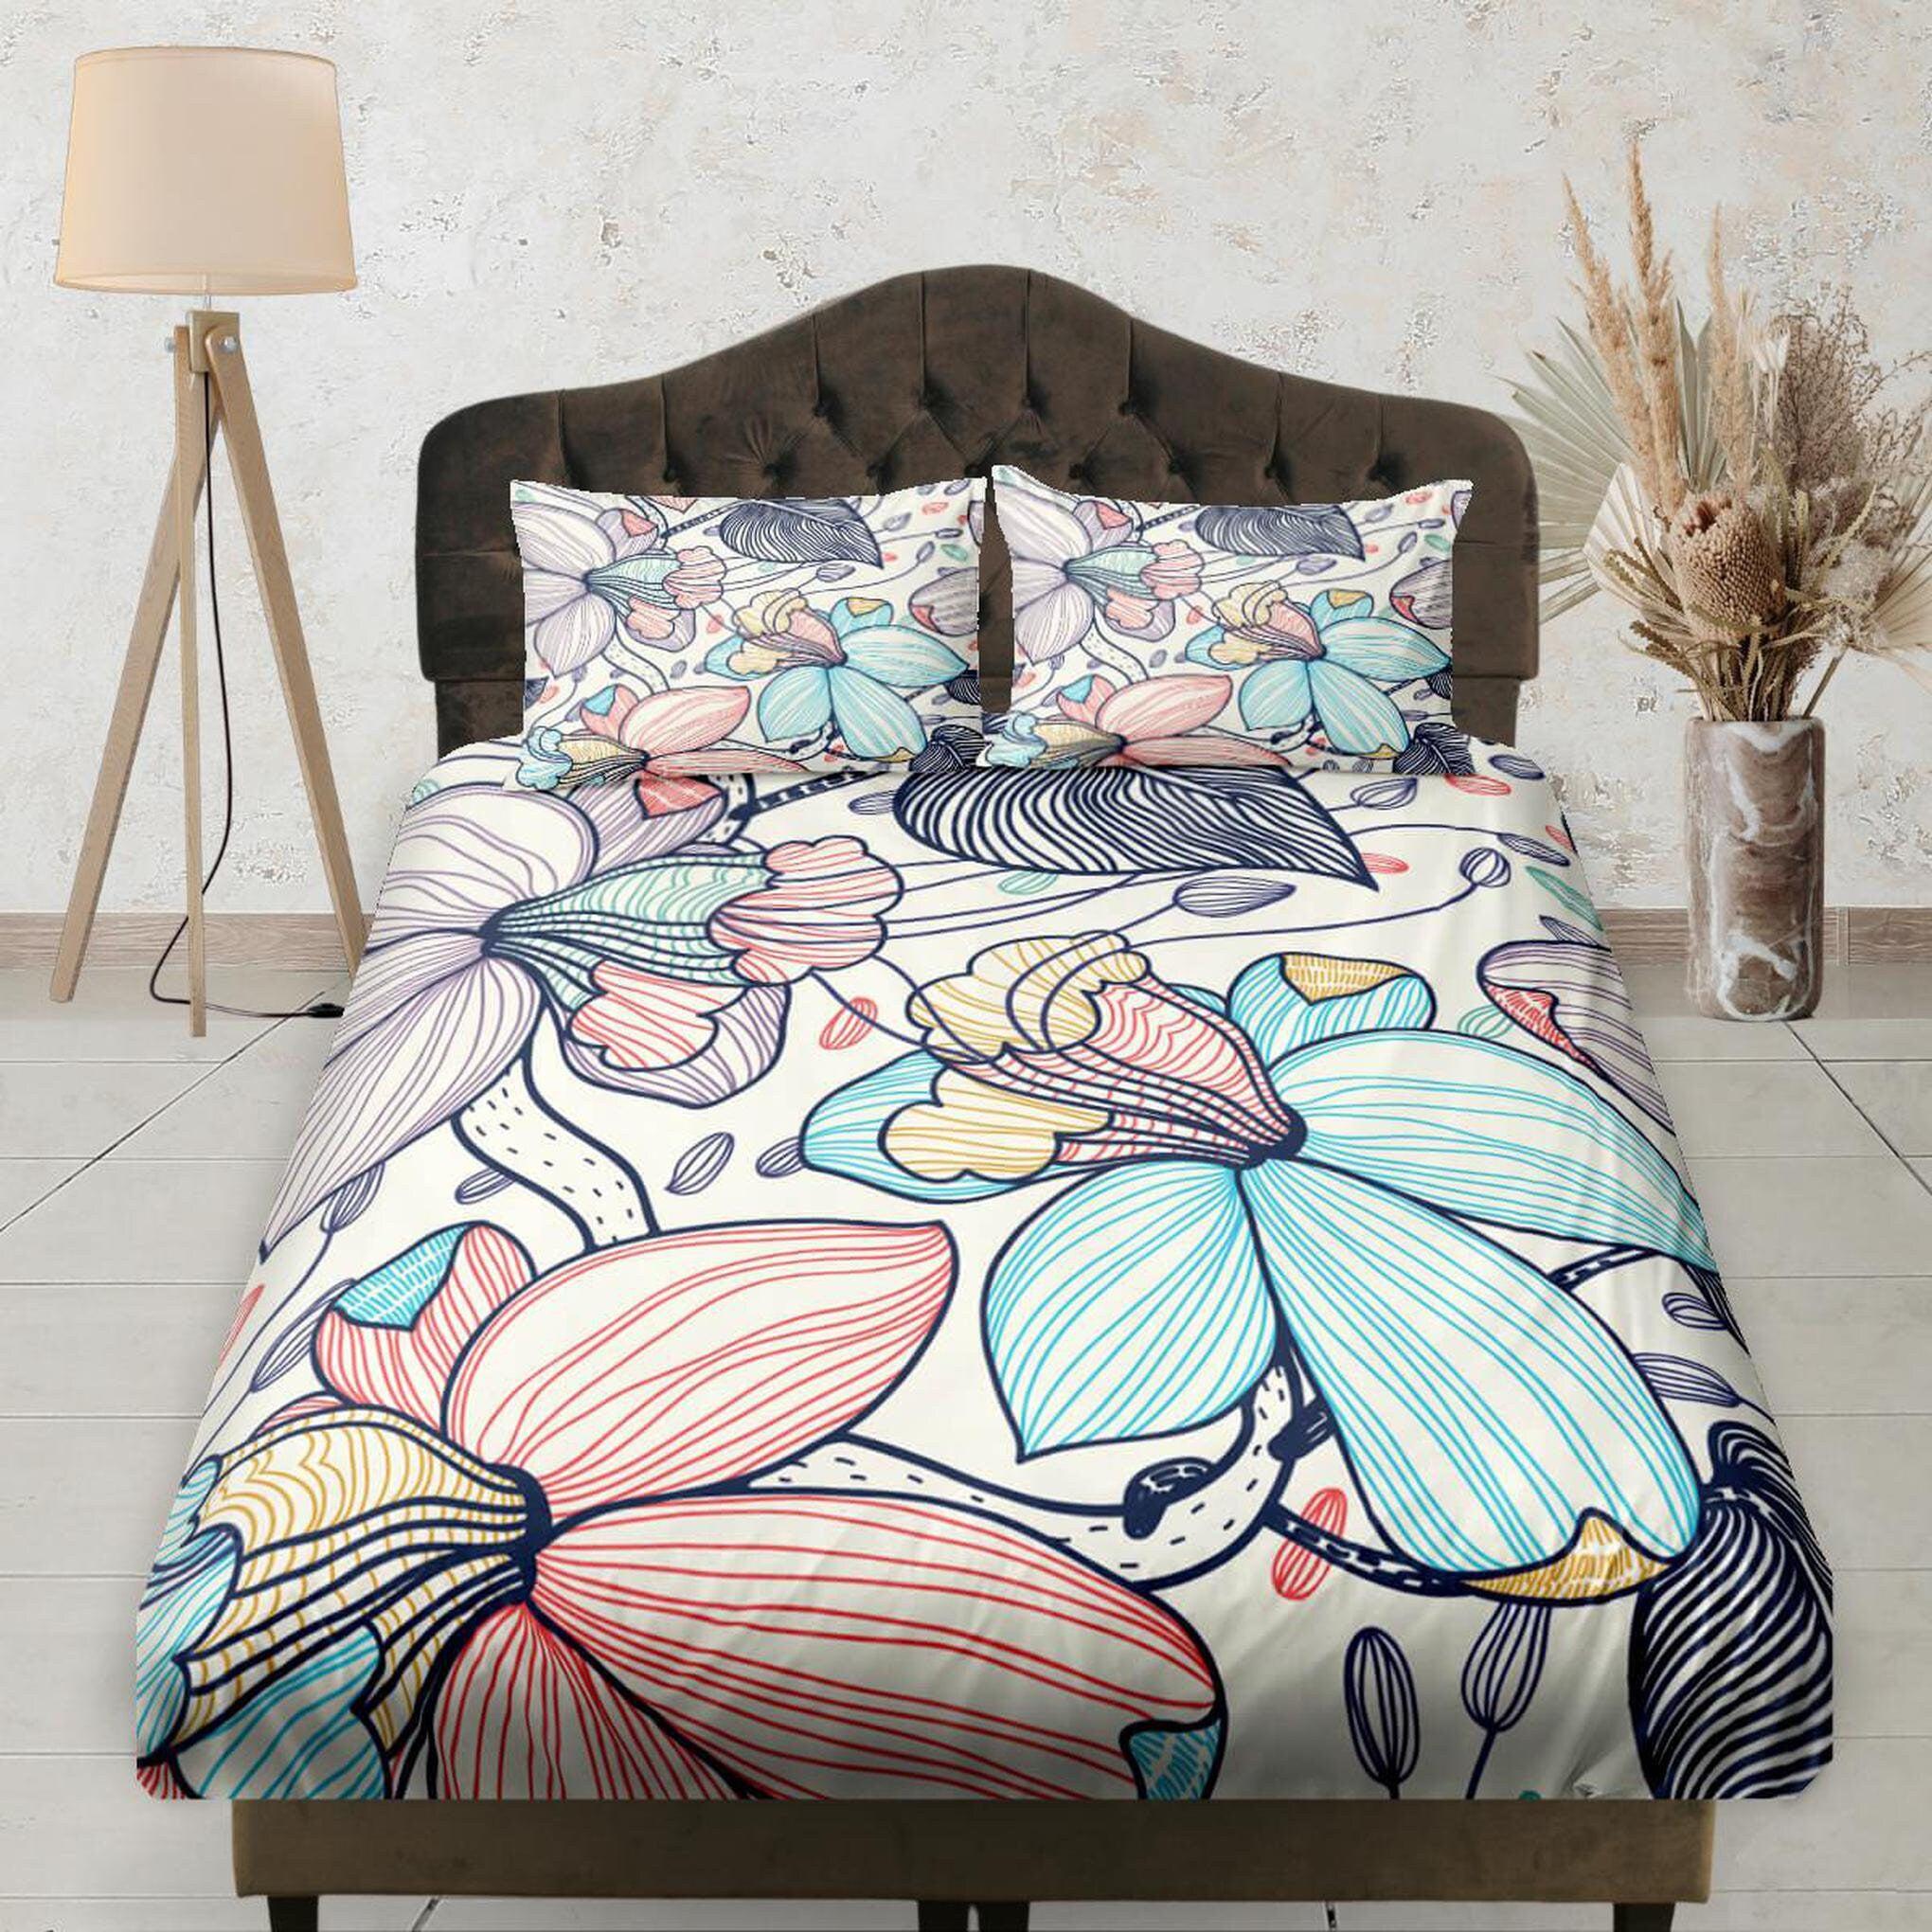 daintyduvet Hand drawn Flowers Pastel Colored Fitted Sheet, Floral Printed Boho Bedding Set Full, Dorm Bedding, Crib Sheet, Shabby Chic Bedding, Elastic